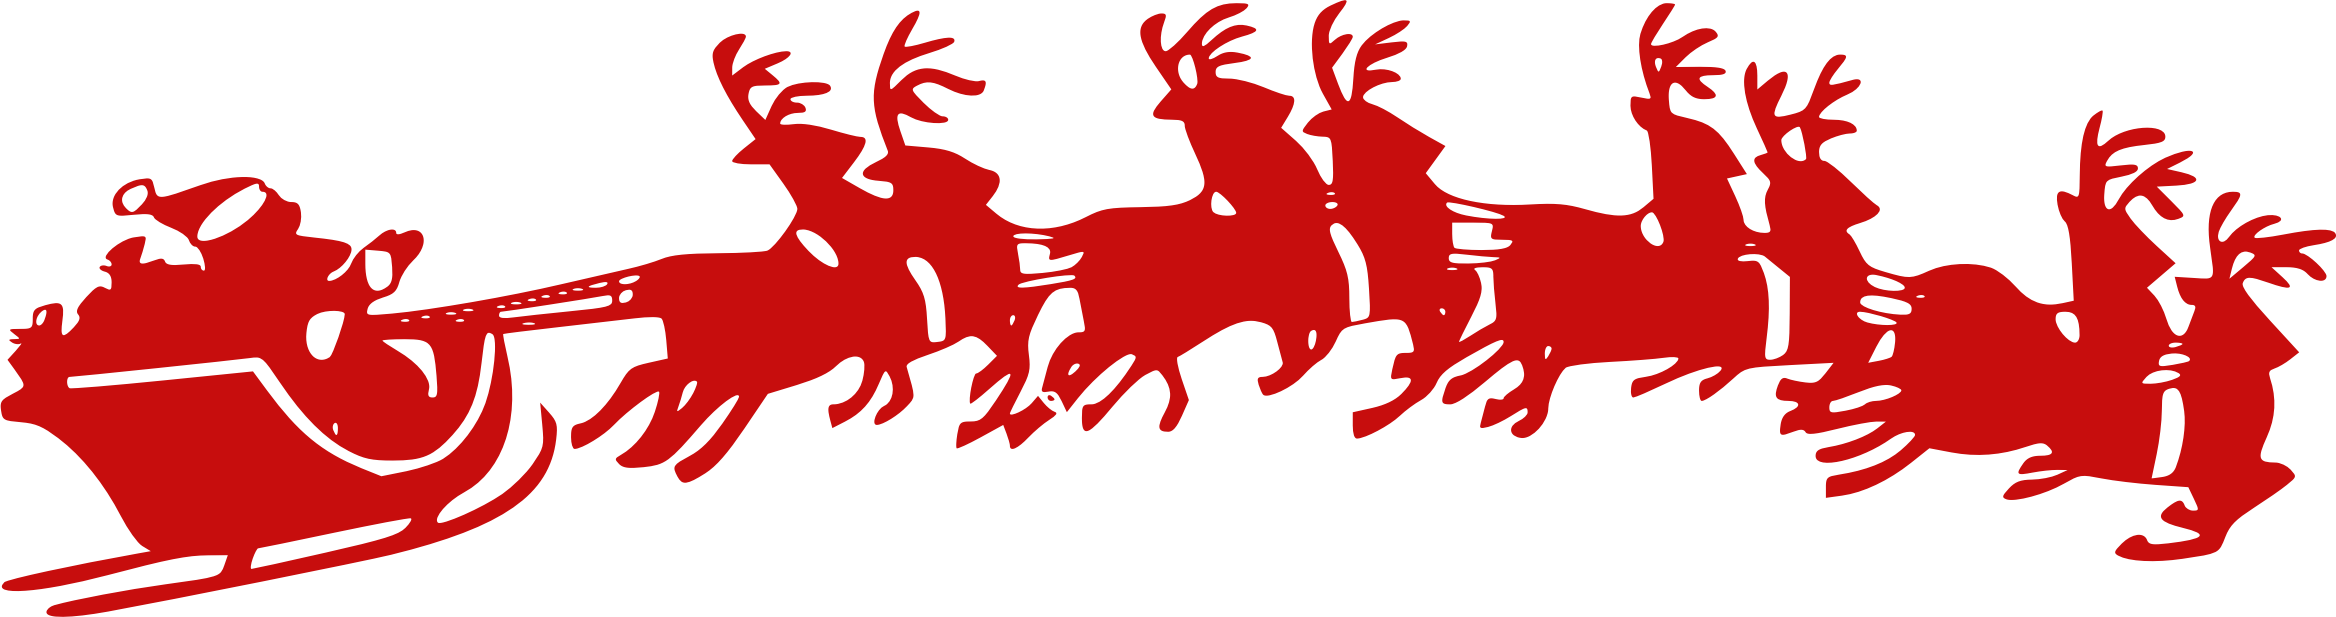 santa sleigh pulled reindeer vector clipart image photo domain photo 30502